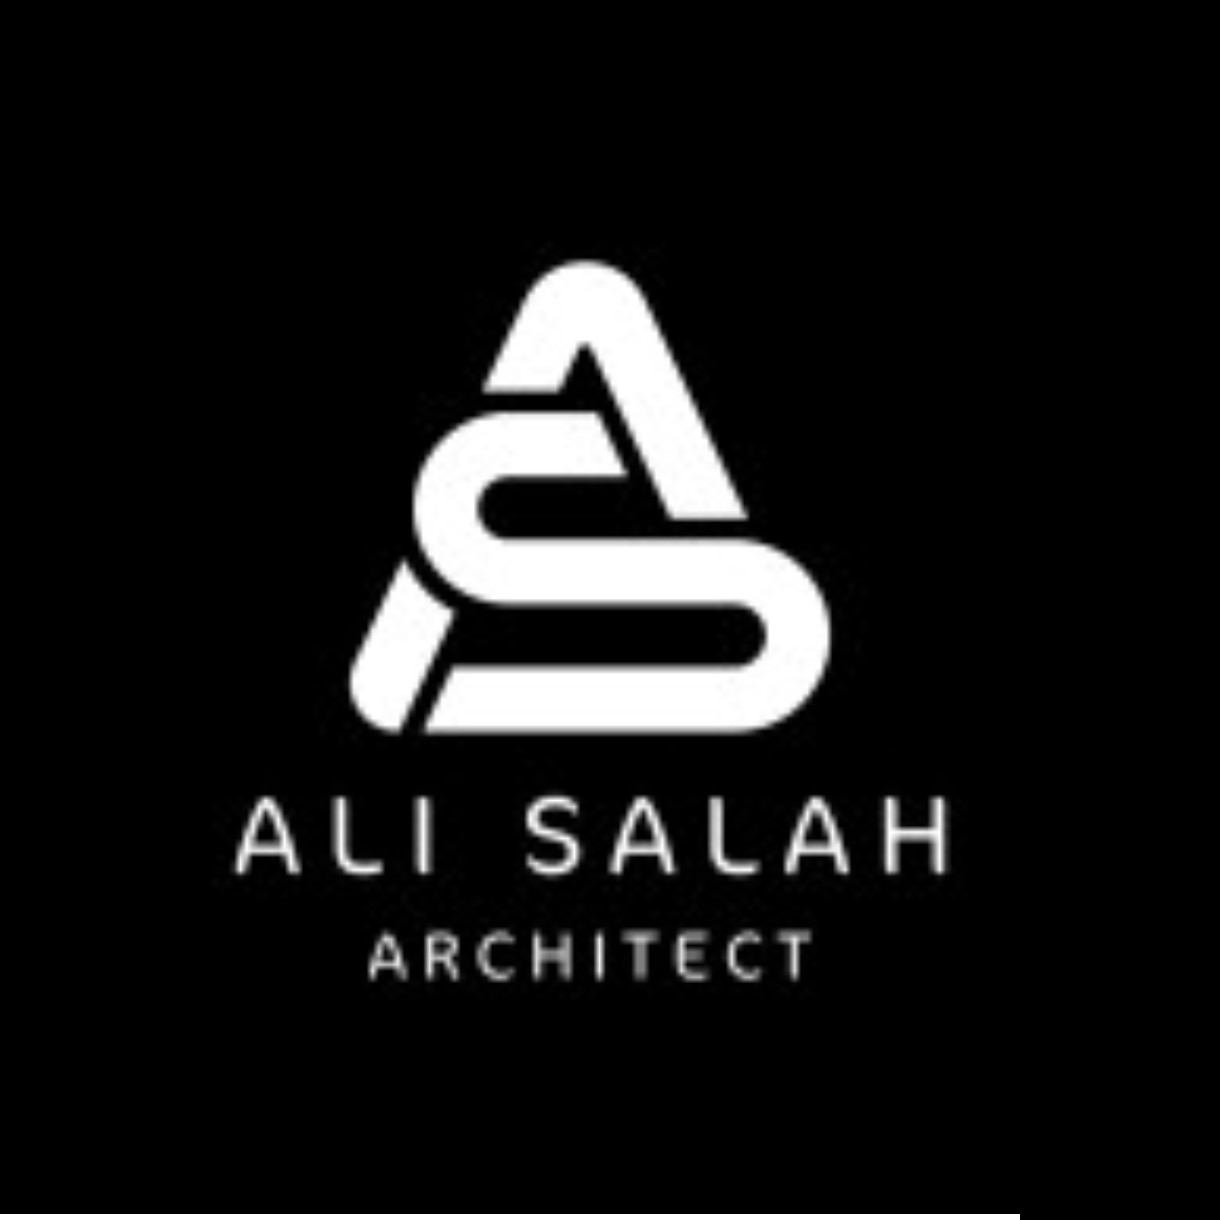 Ali Salah Architect